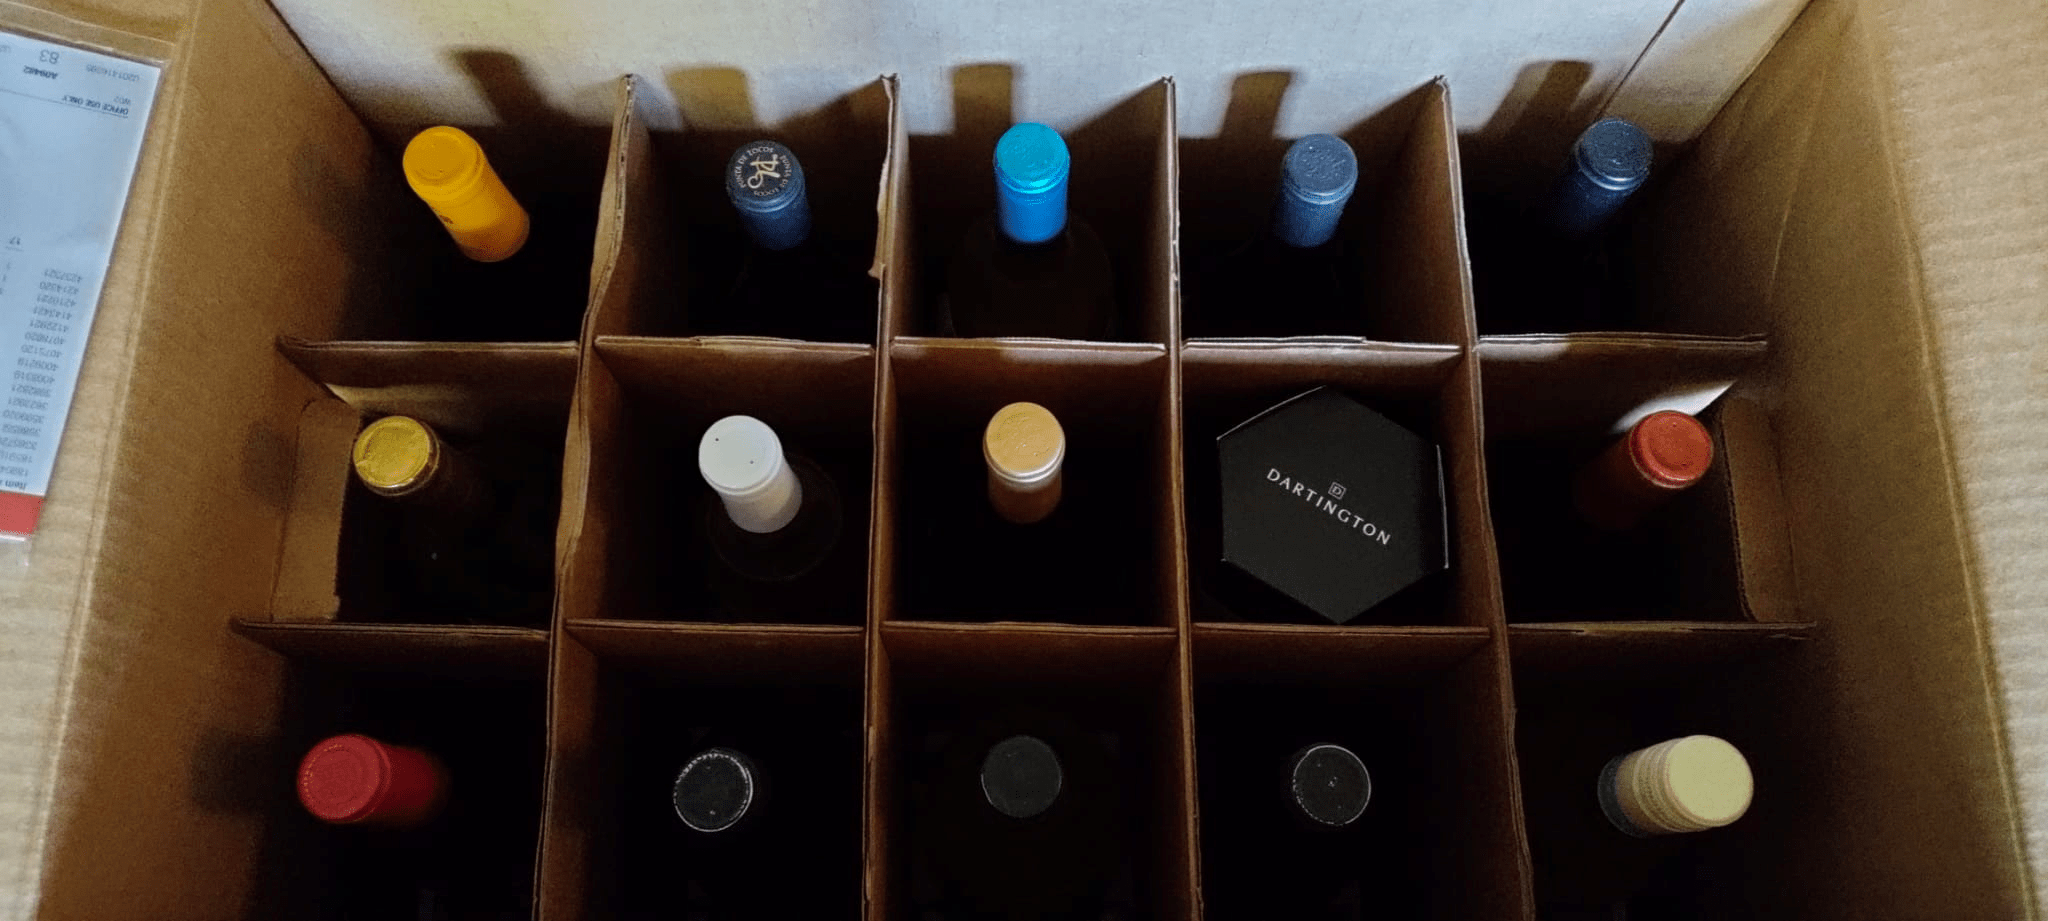 Box of wine from WSJ Wine Club.